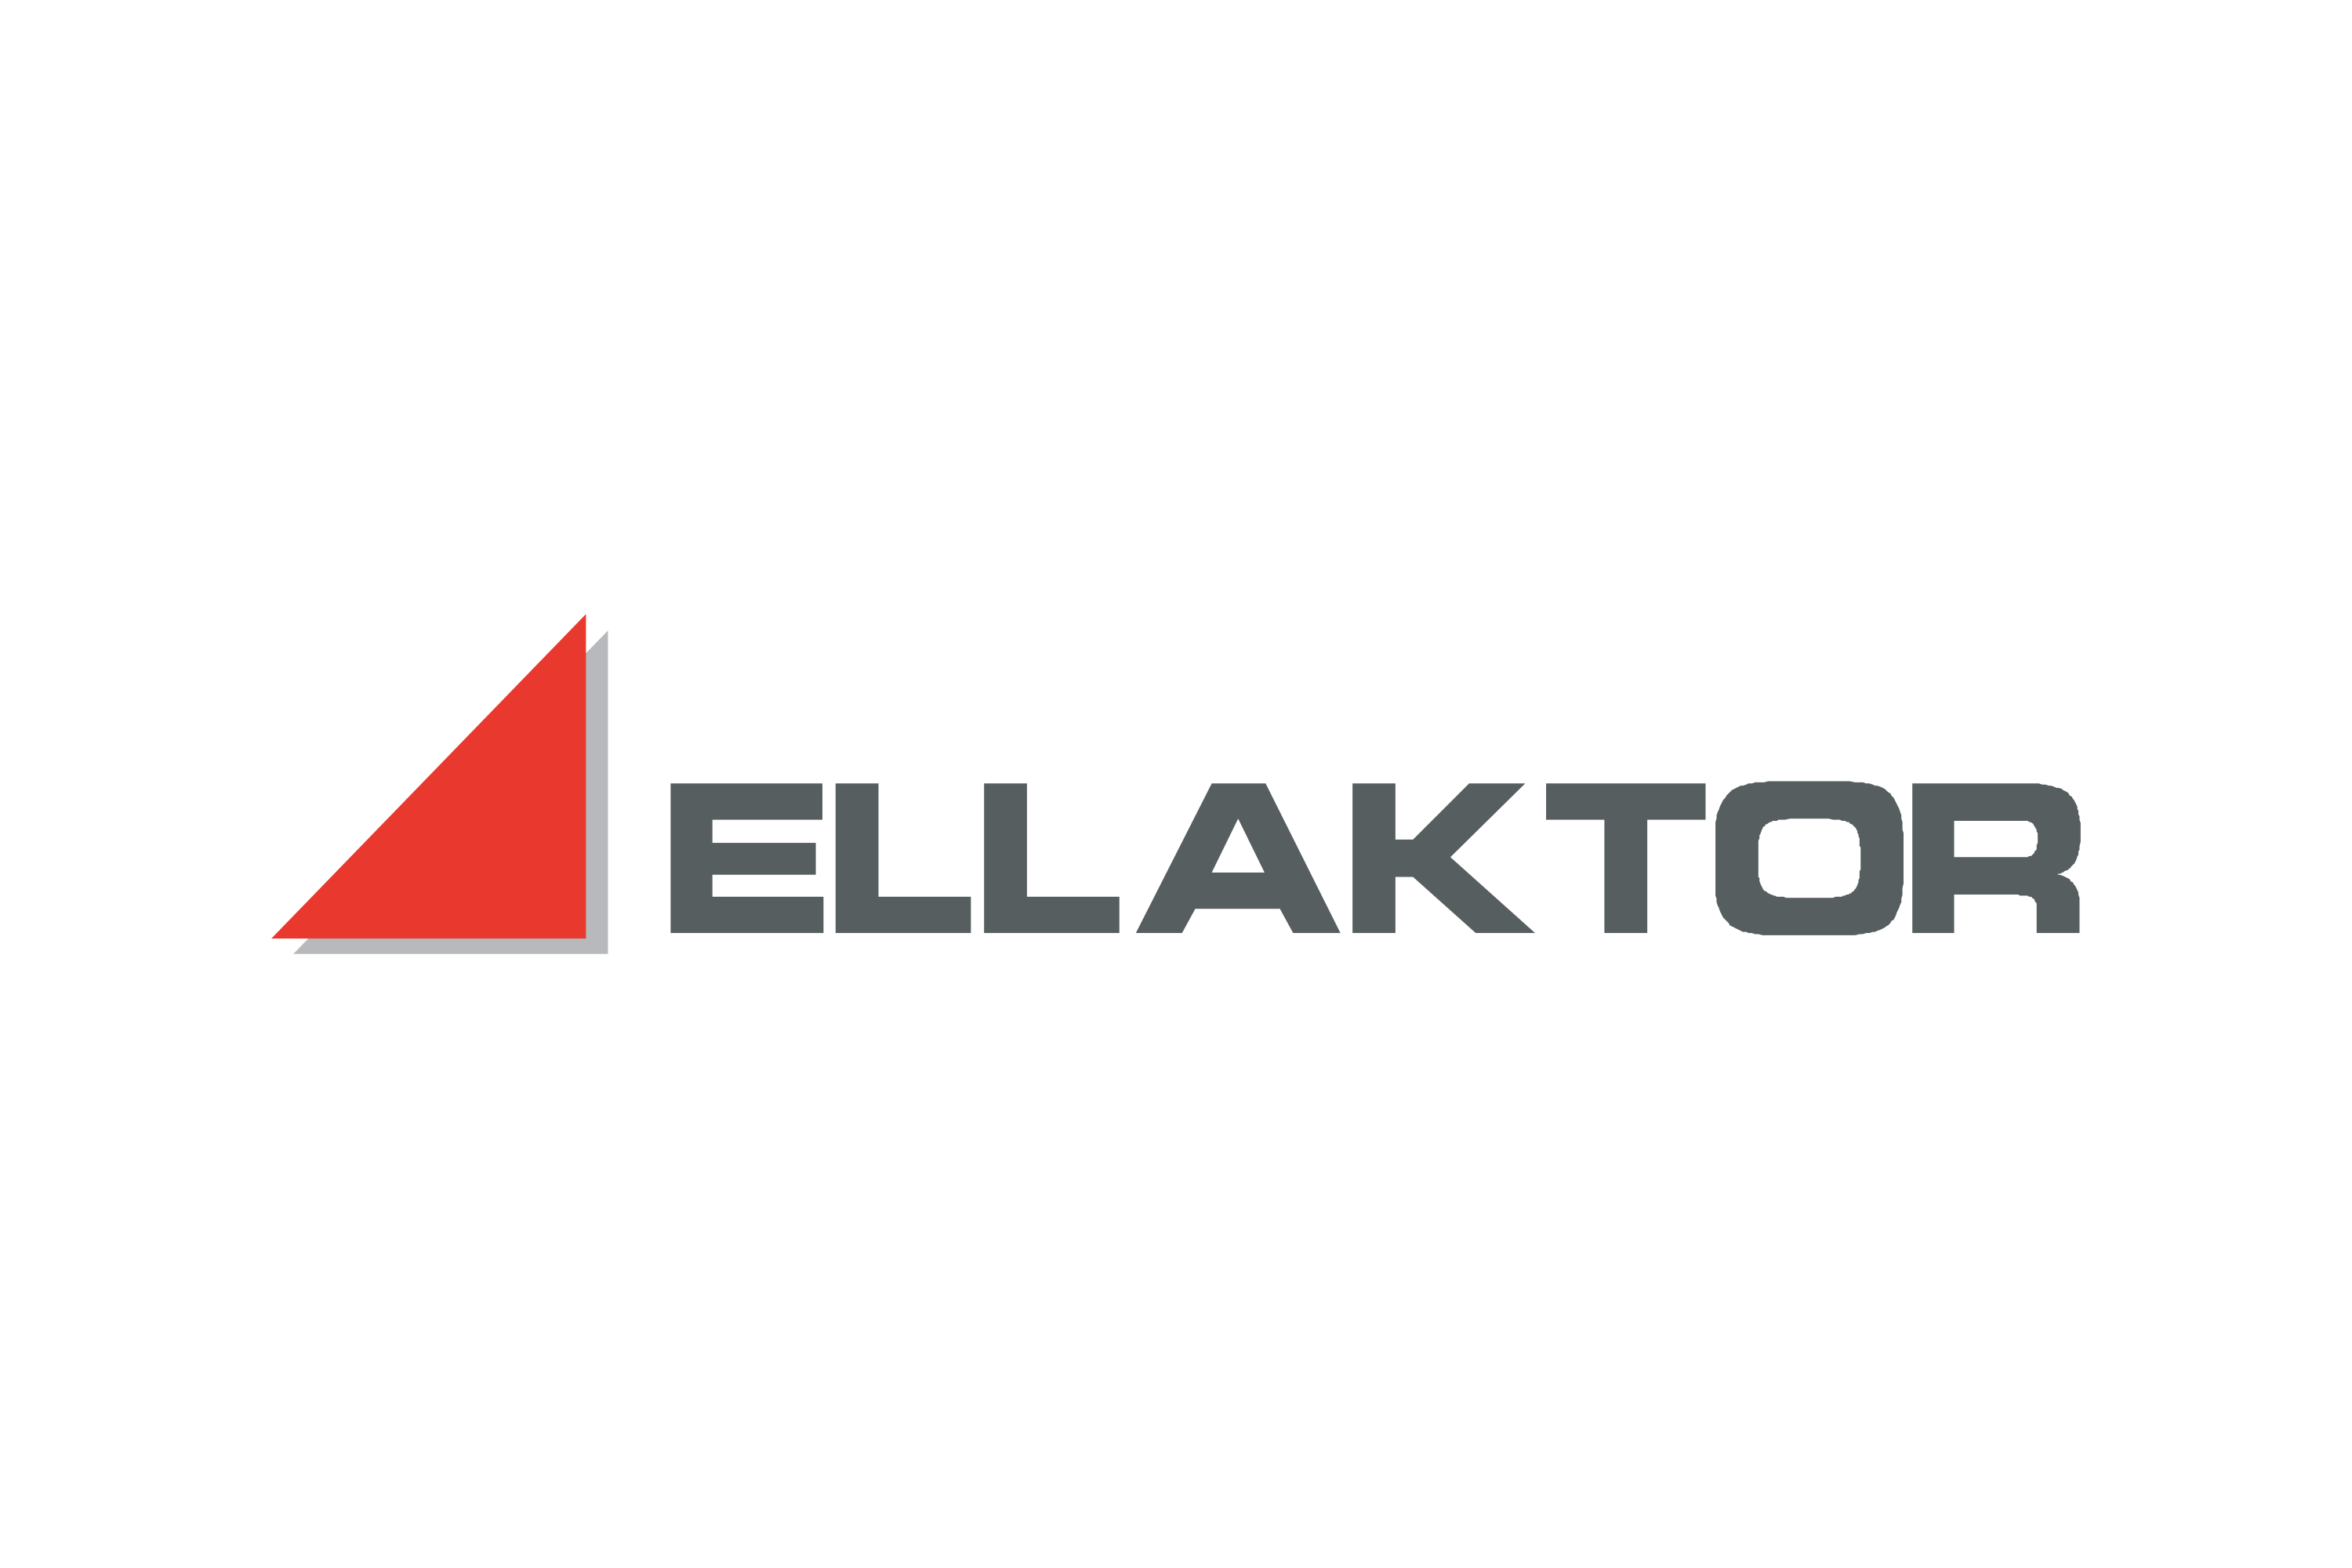 Ellaktor Logo